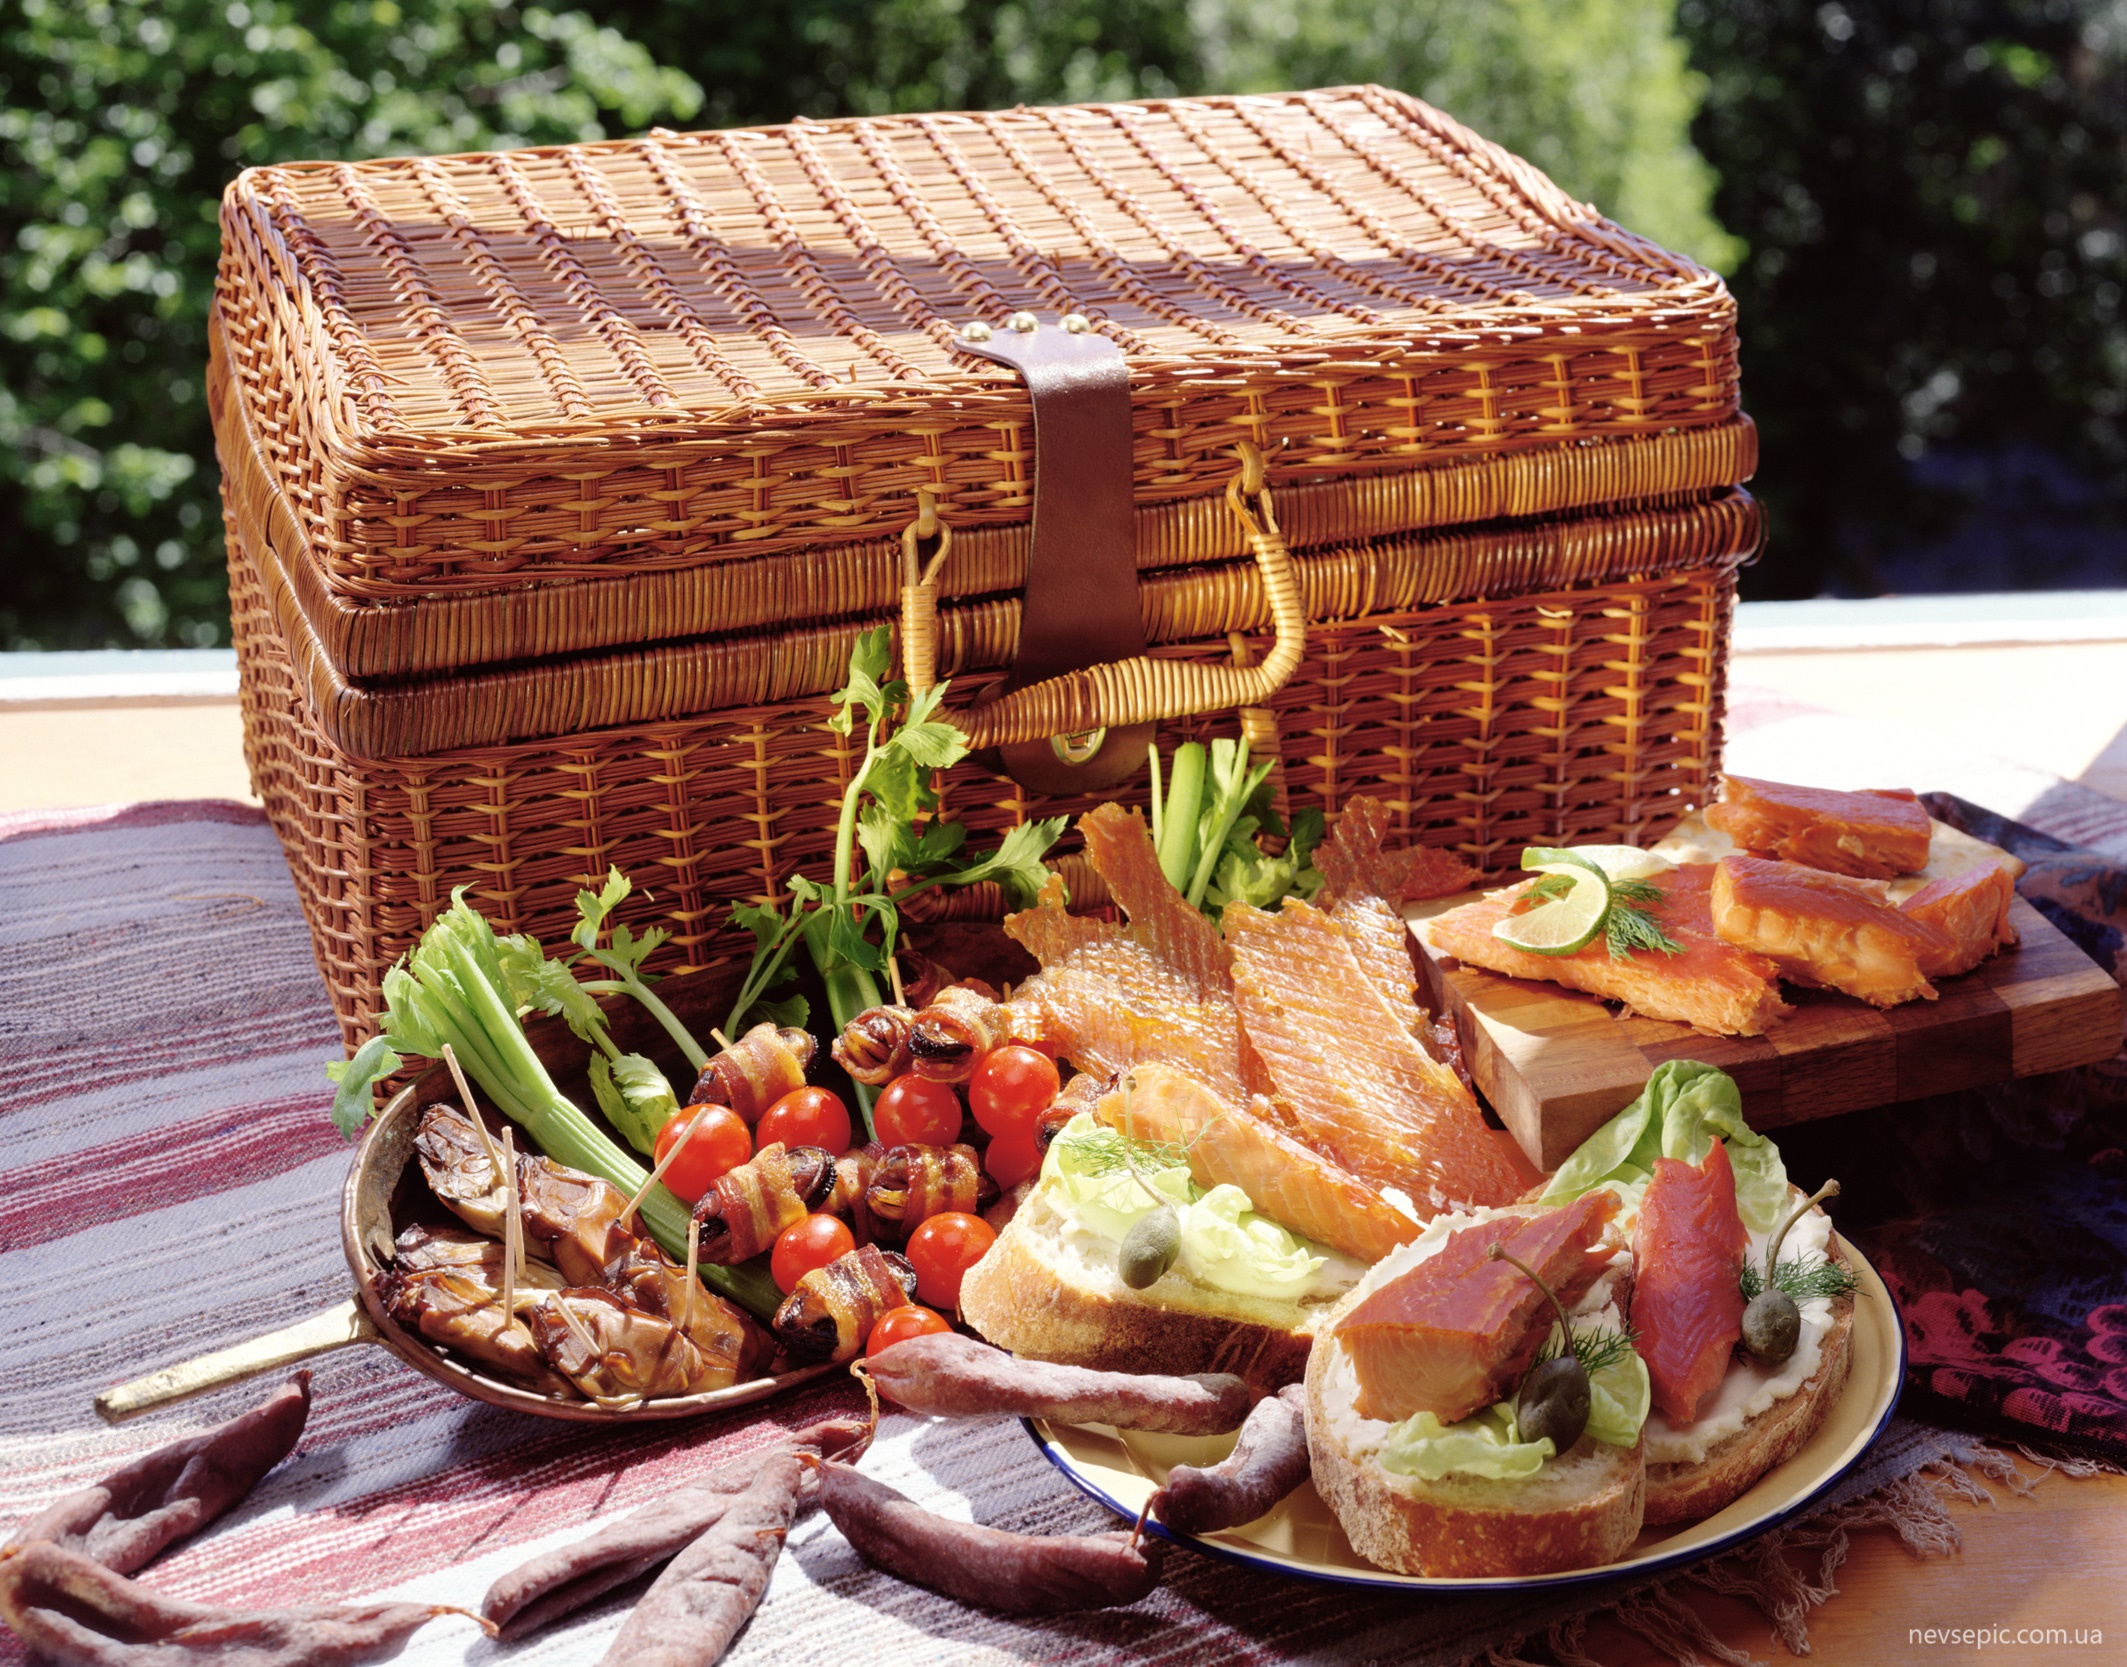 Доставка пикника. Корзинка для пикника на природе. Корзинка для пикника с едой. Корзинка для пикника с продуктами. Корзина на пикник с продуктами.